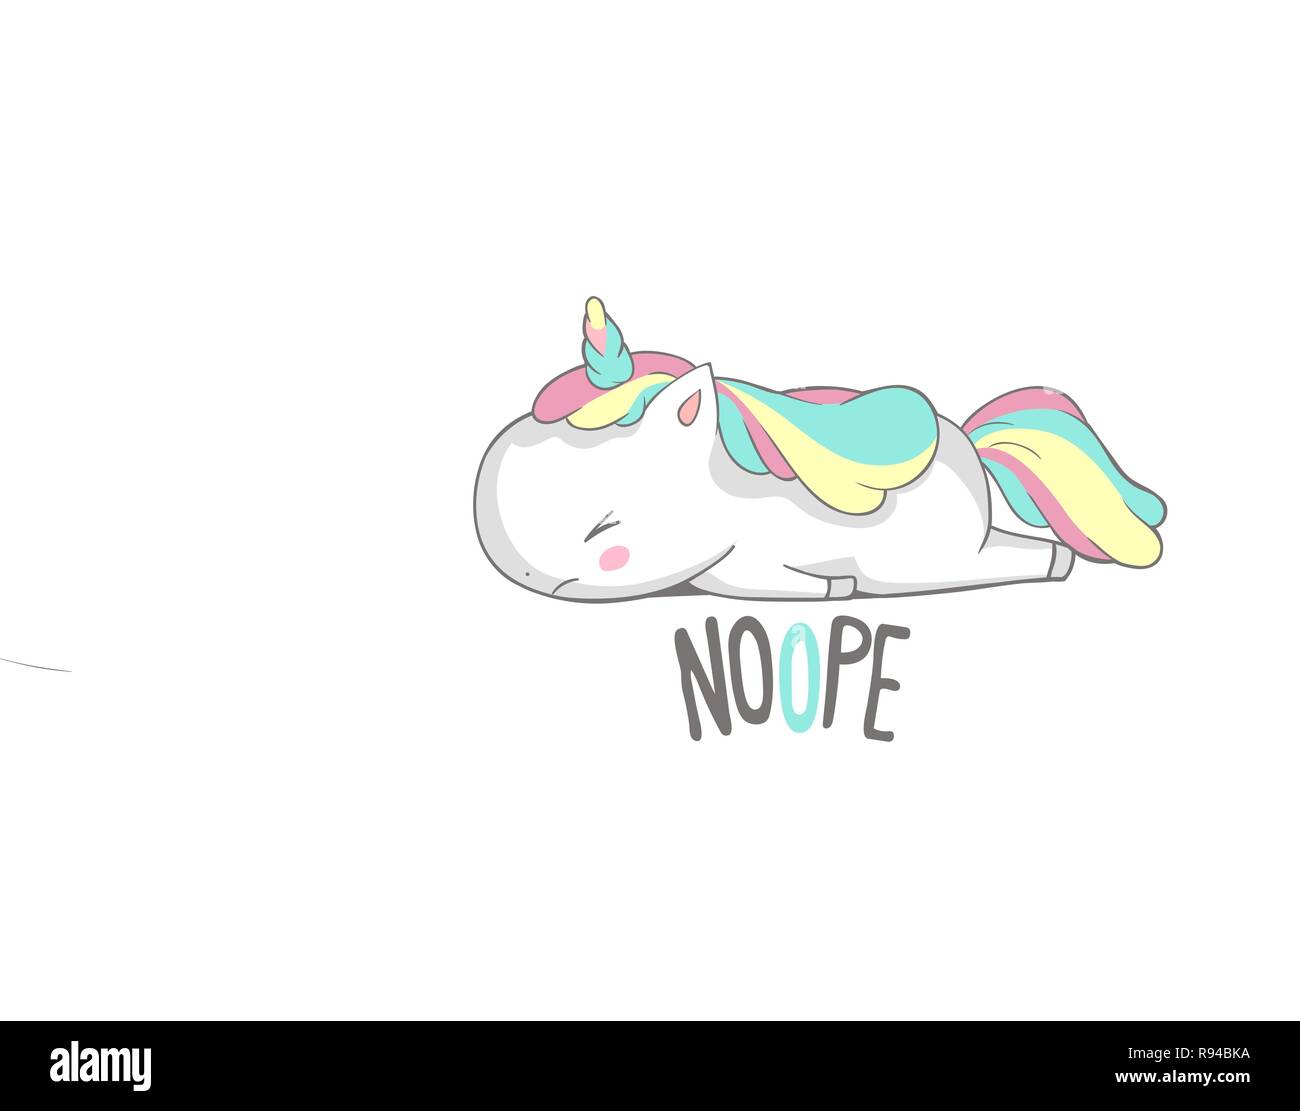 Angry Sad Unicorn Lies Say Nope Poster Design Stock Vector